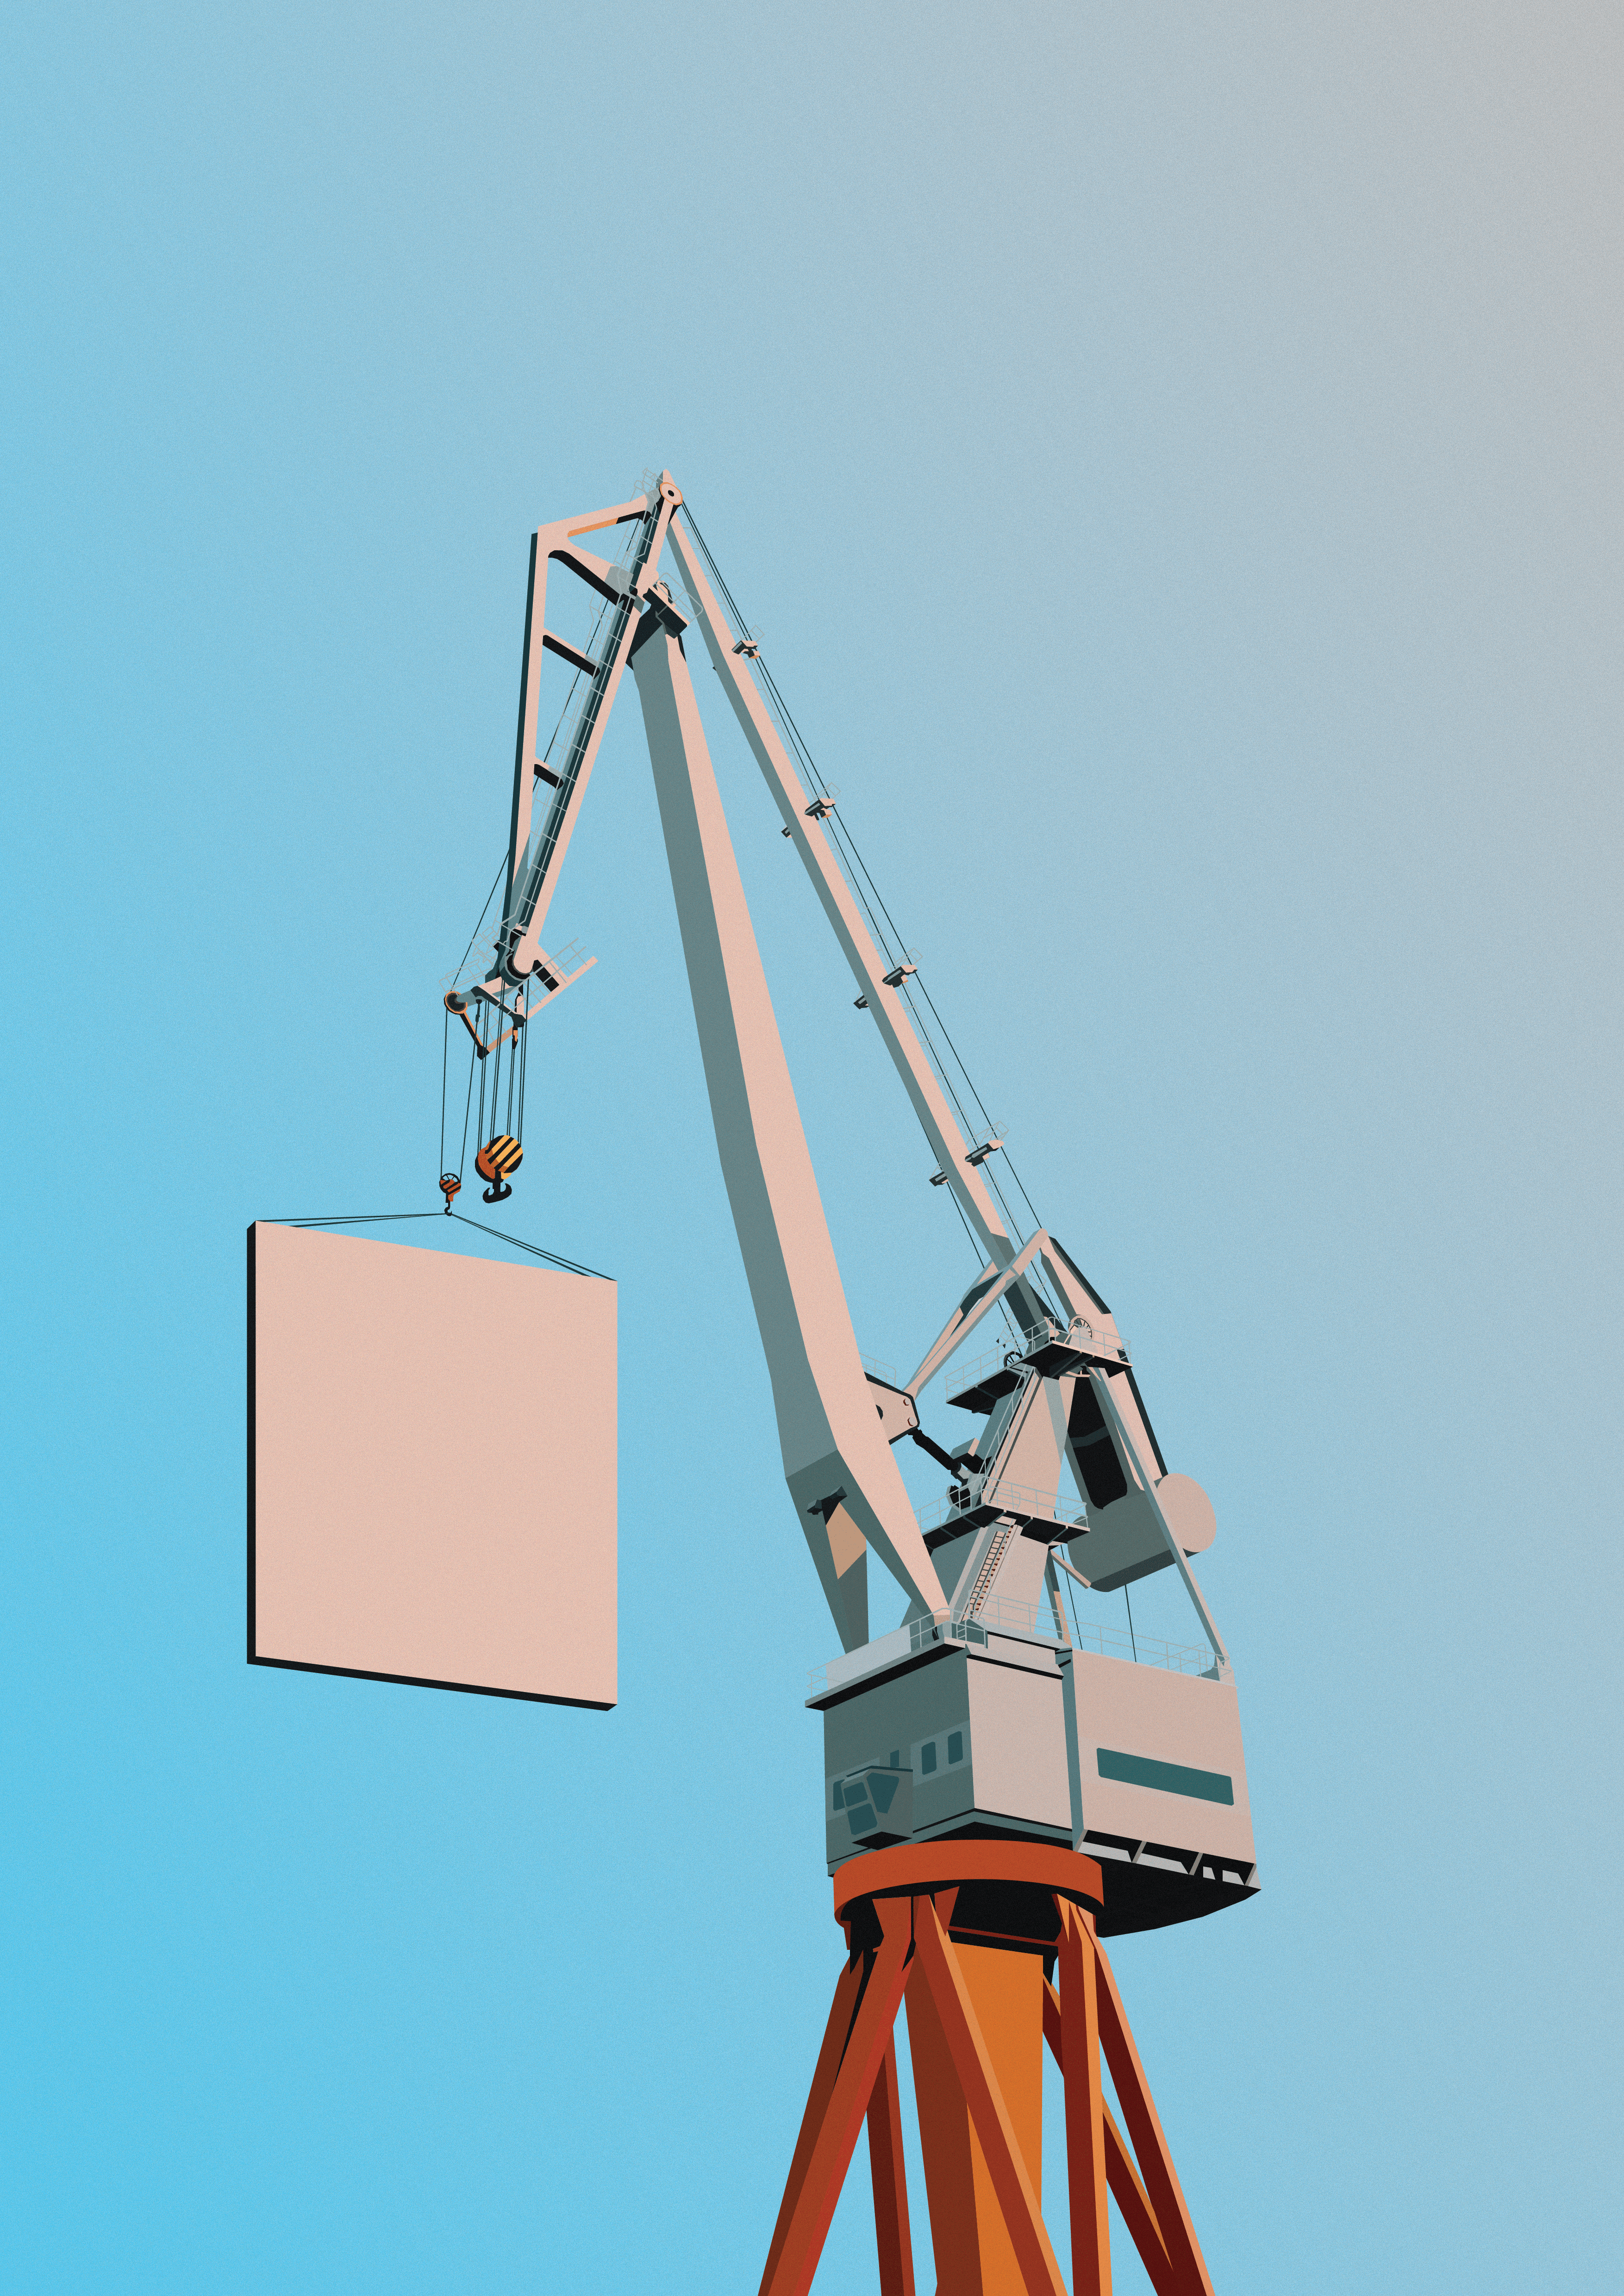 The Bulk-handling Crane